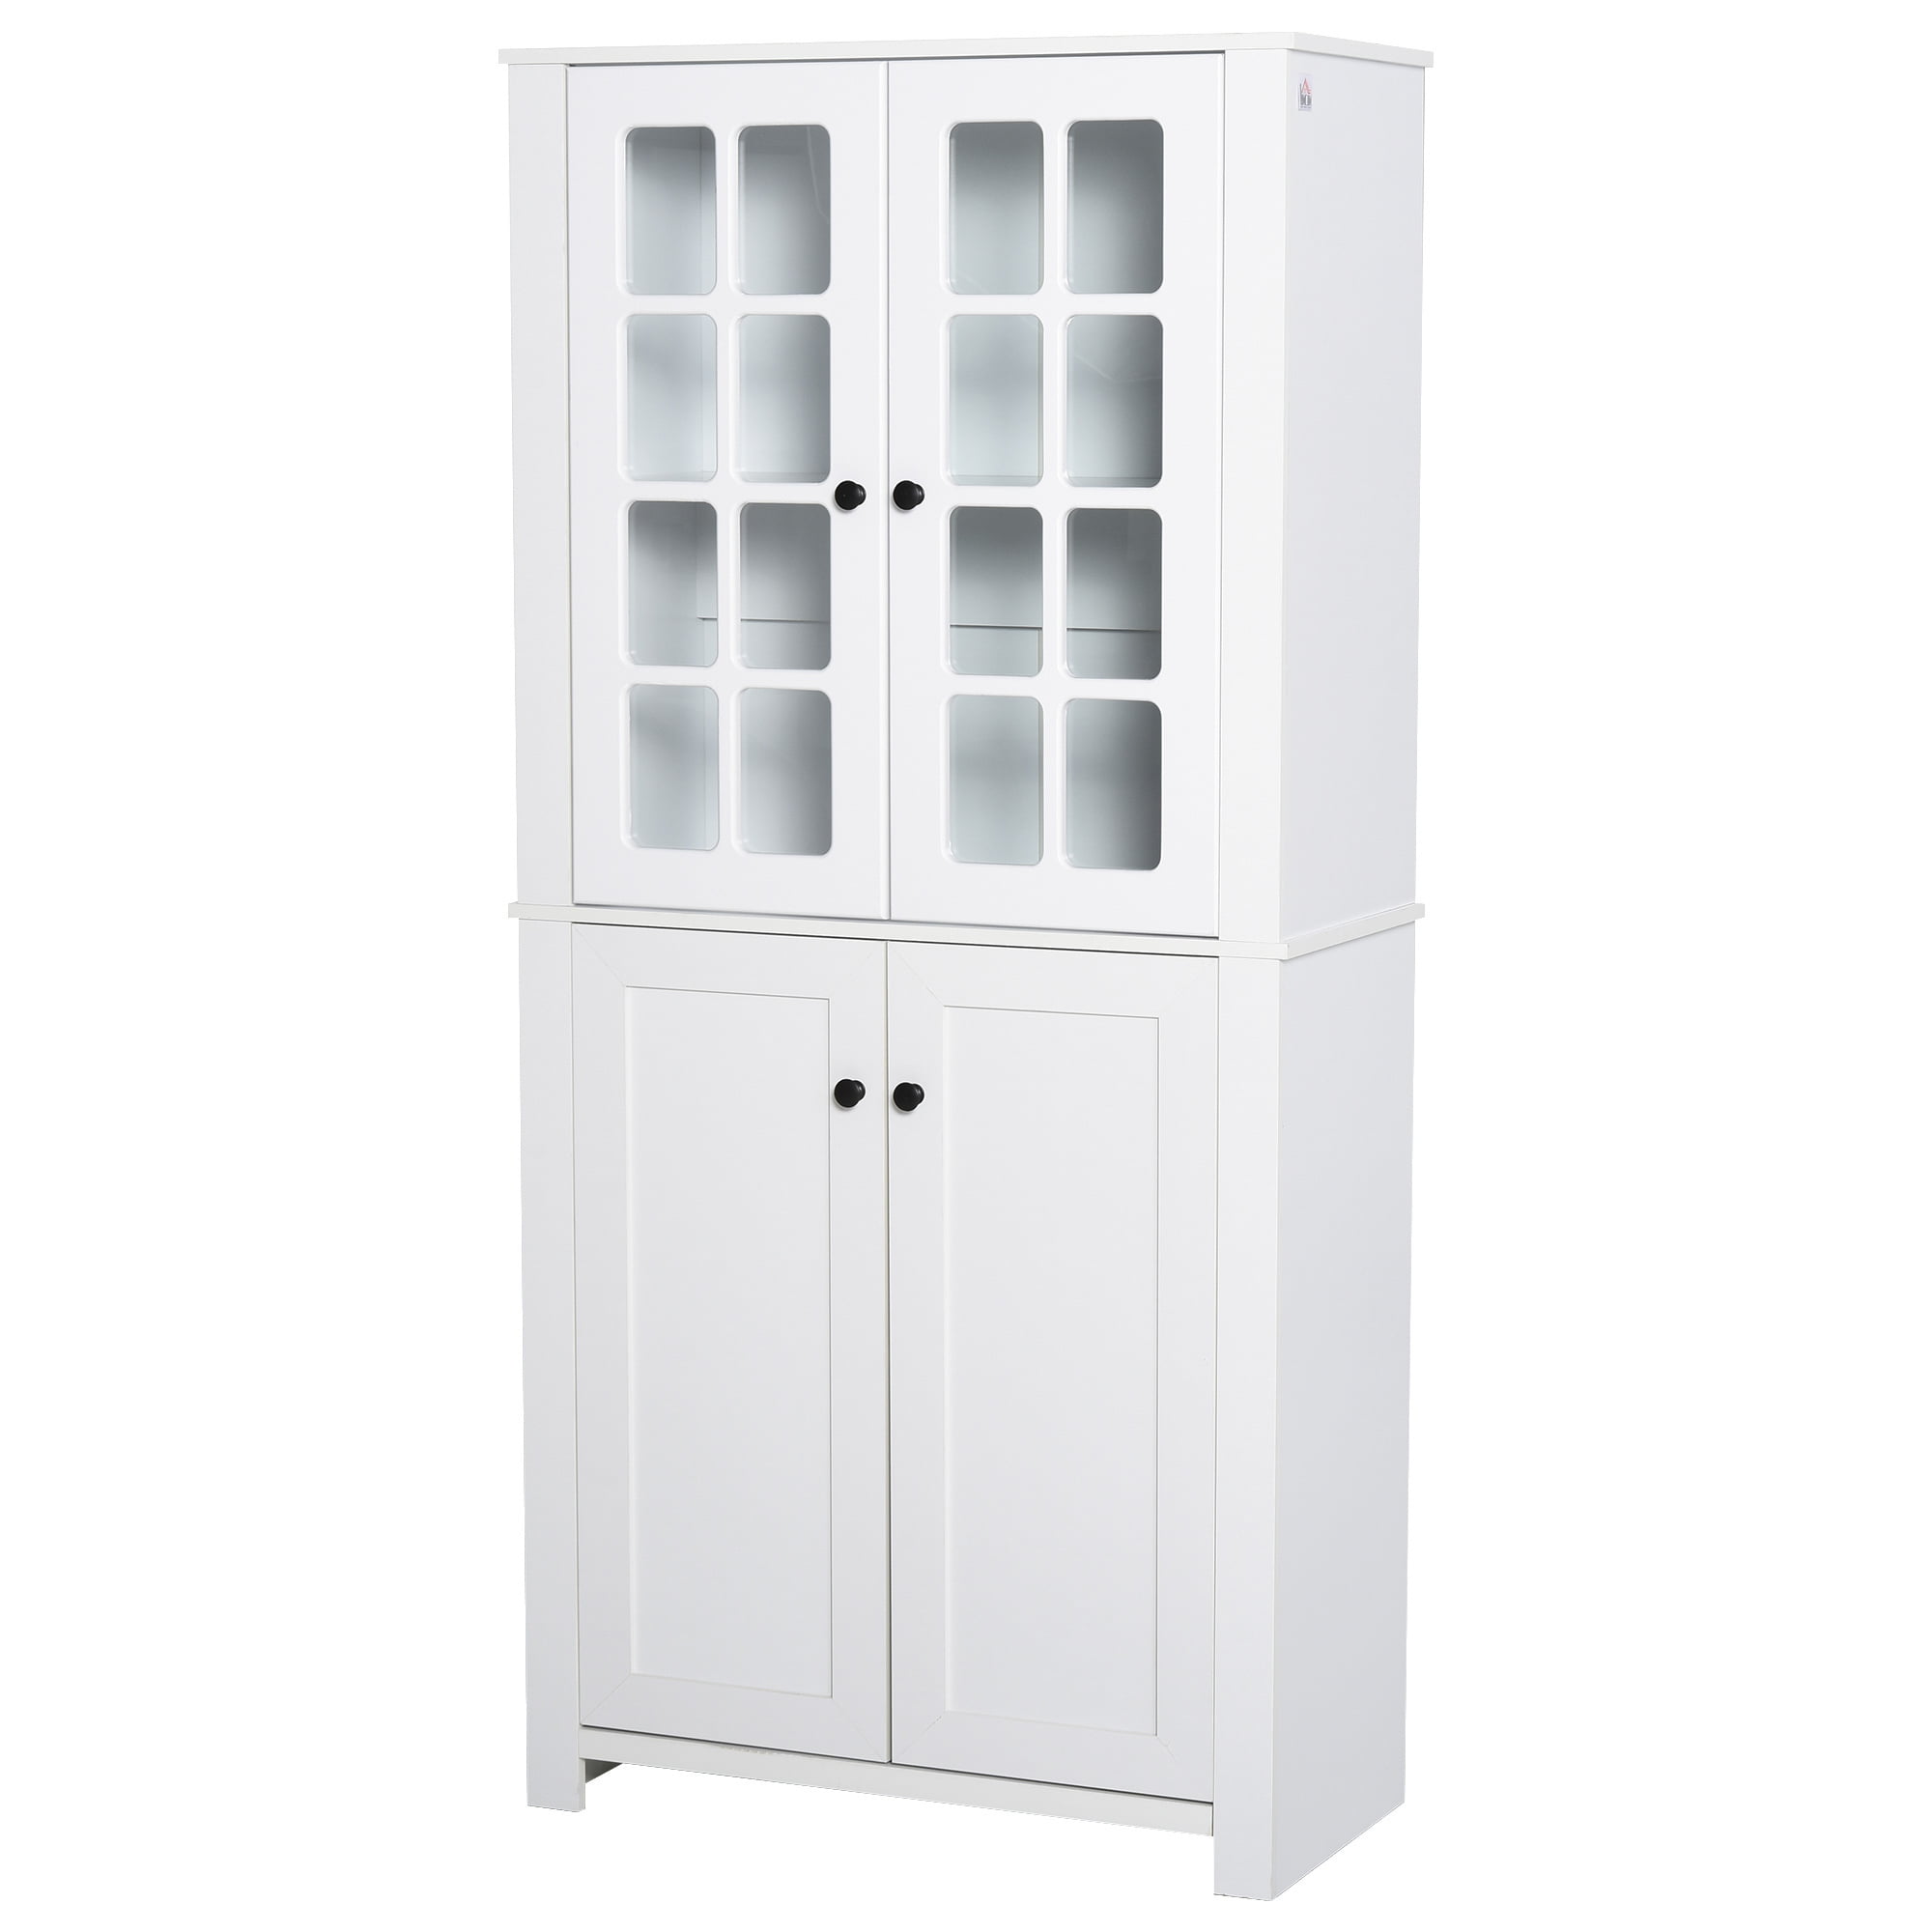  glass door kitchen cabinets home depot